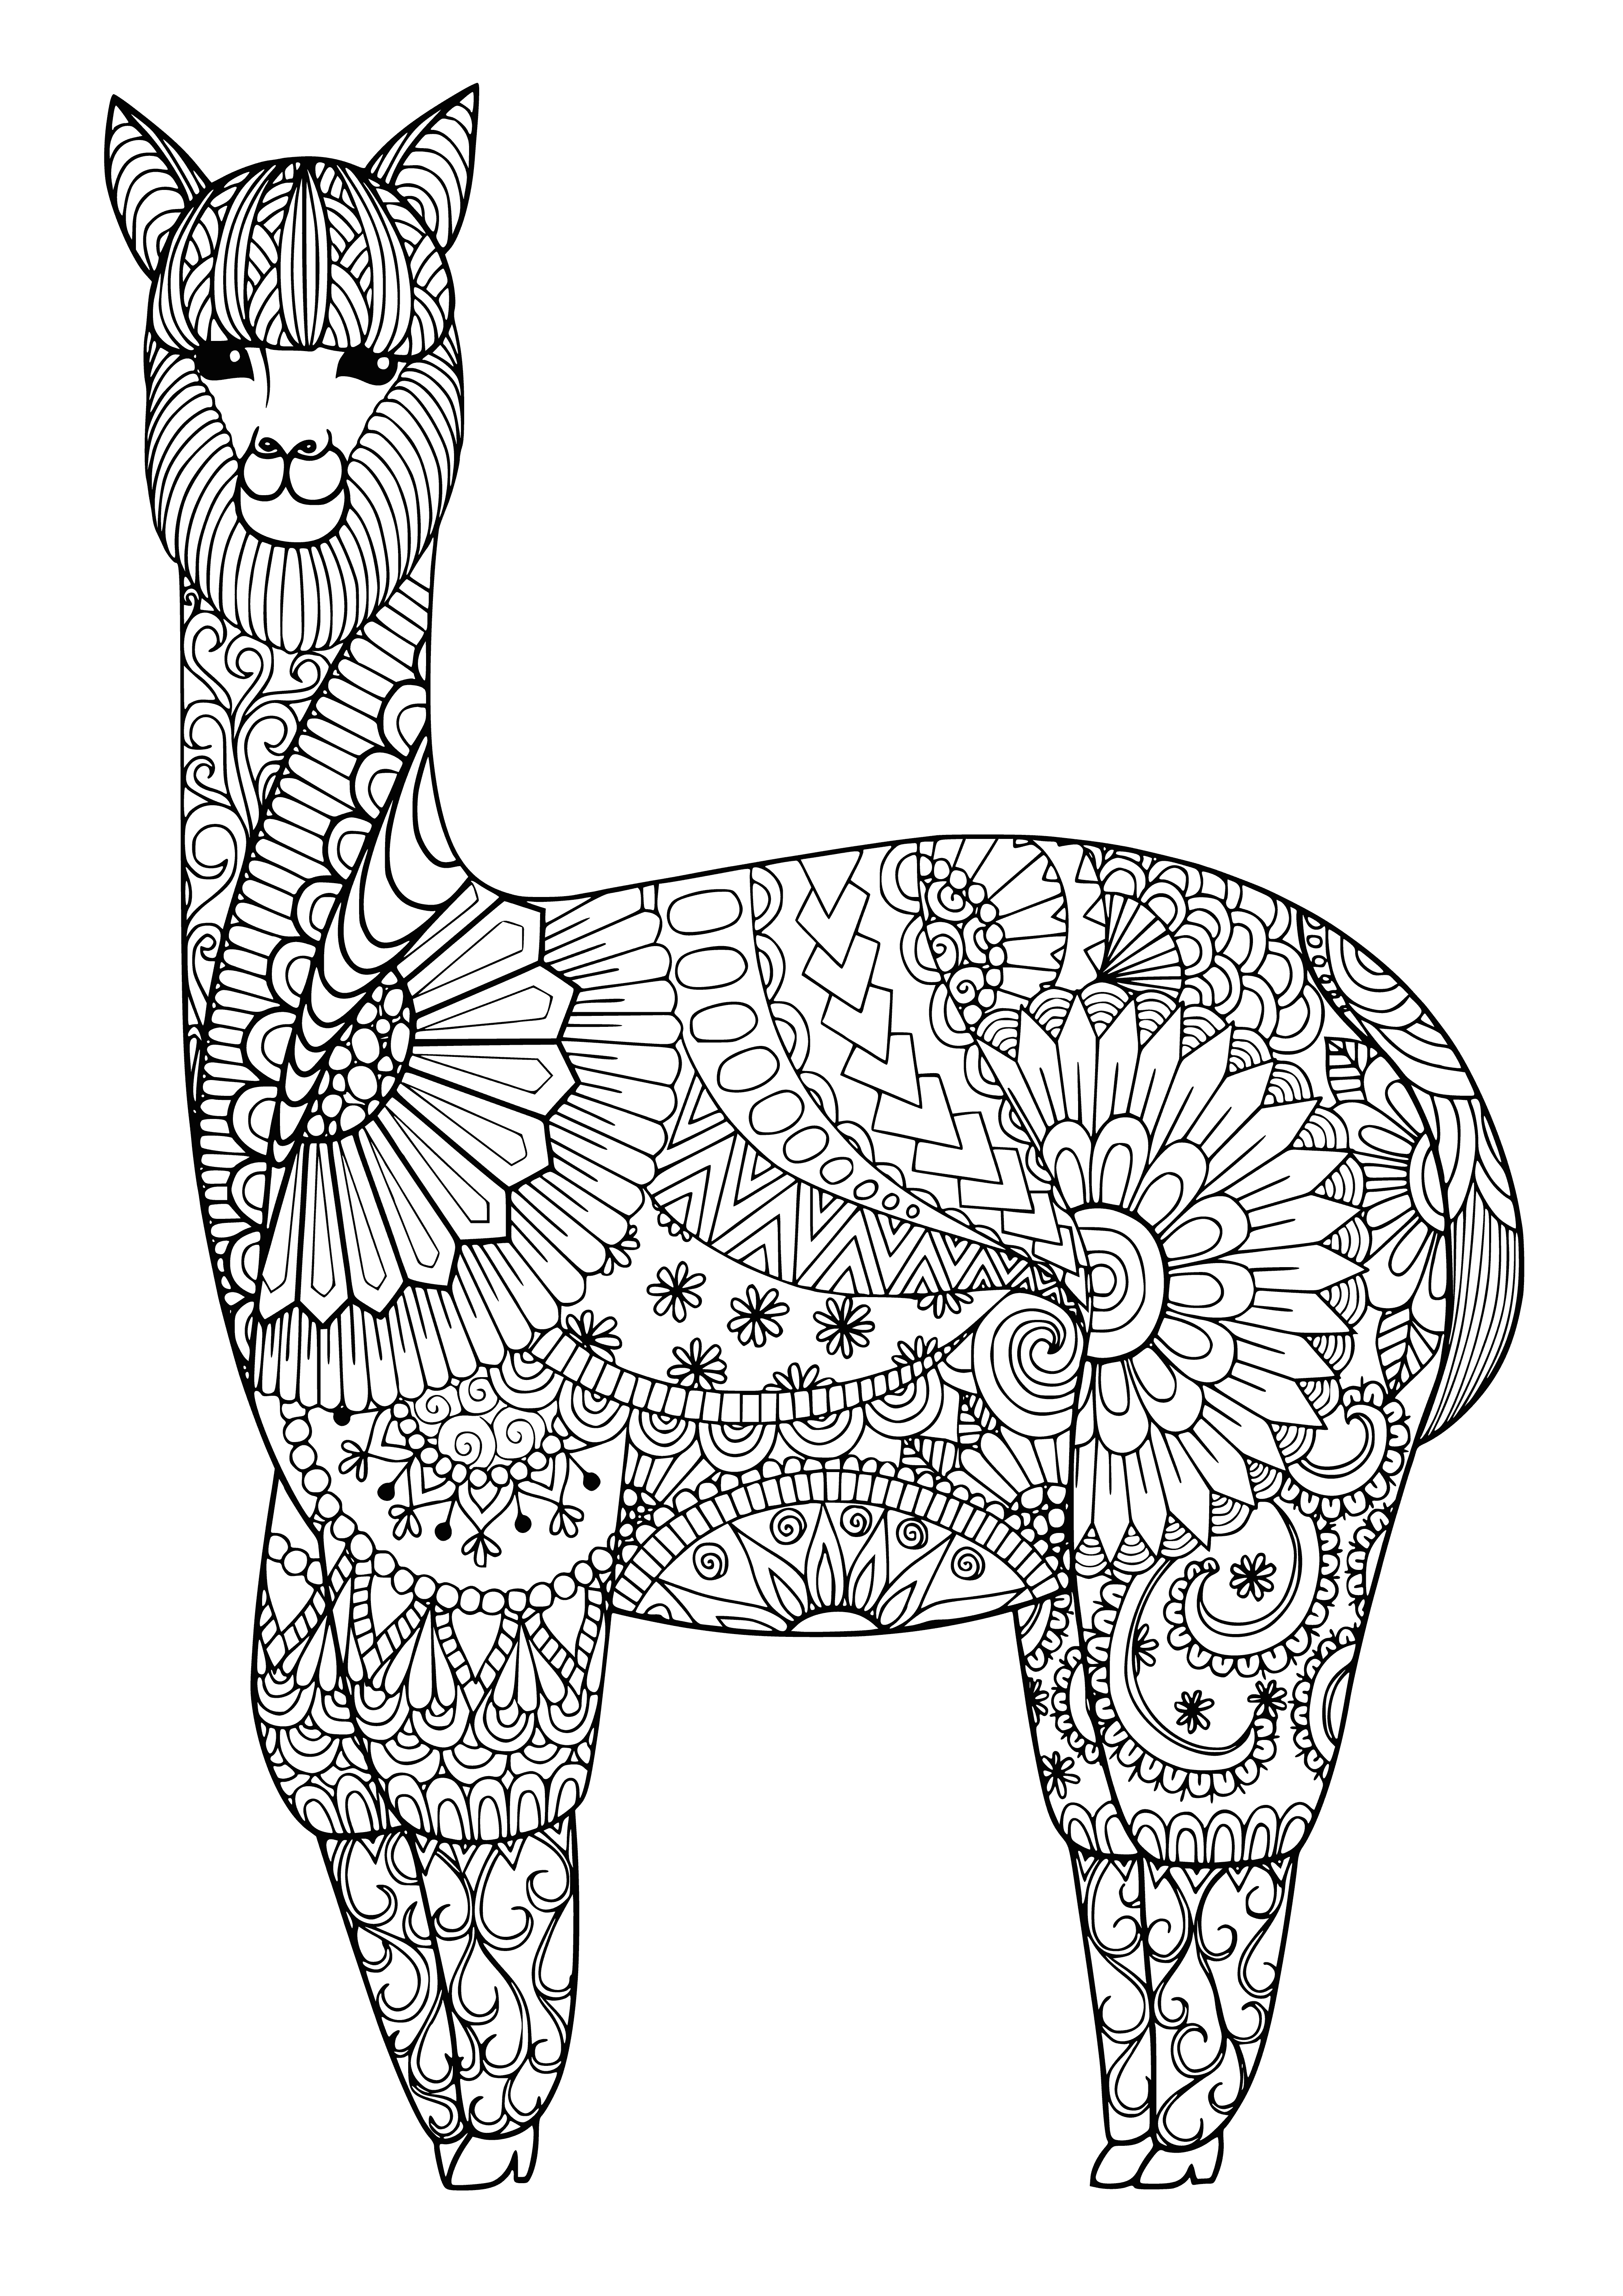 Llama coloring page